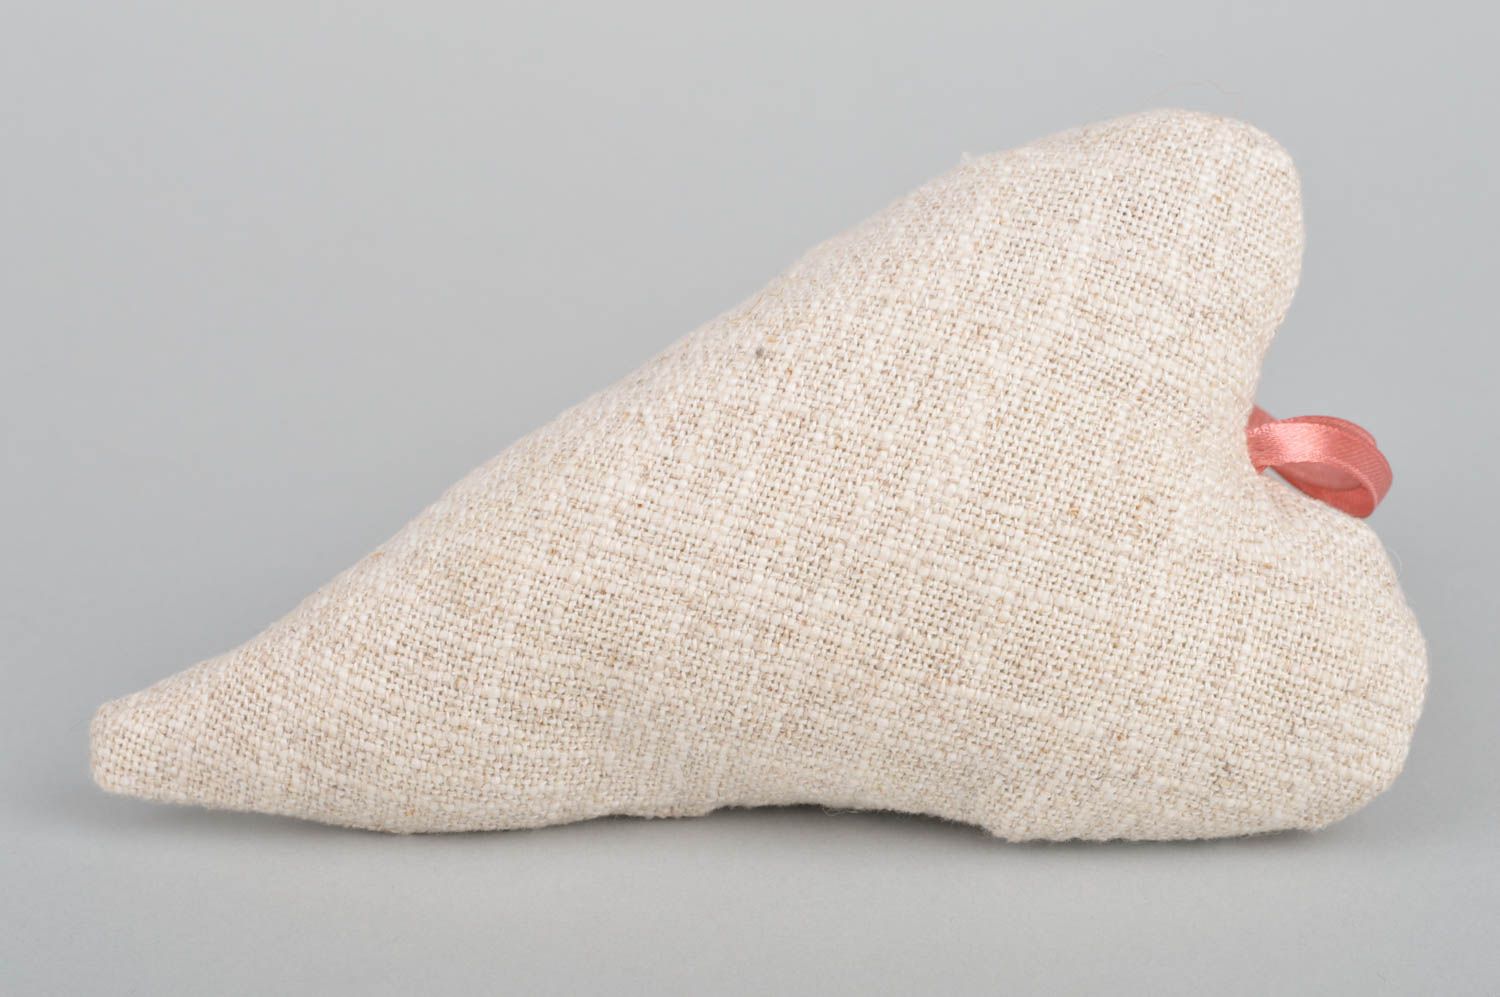 Handmade heart shaped scented fabric interior sachet pillow for home decor photo 5